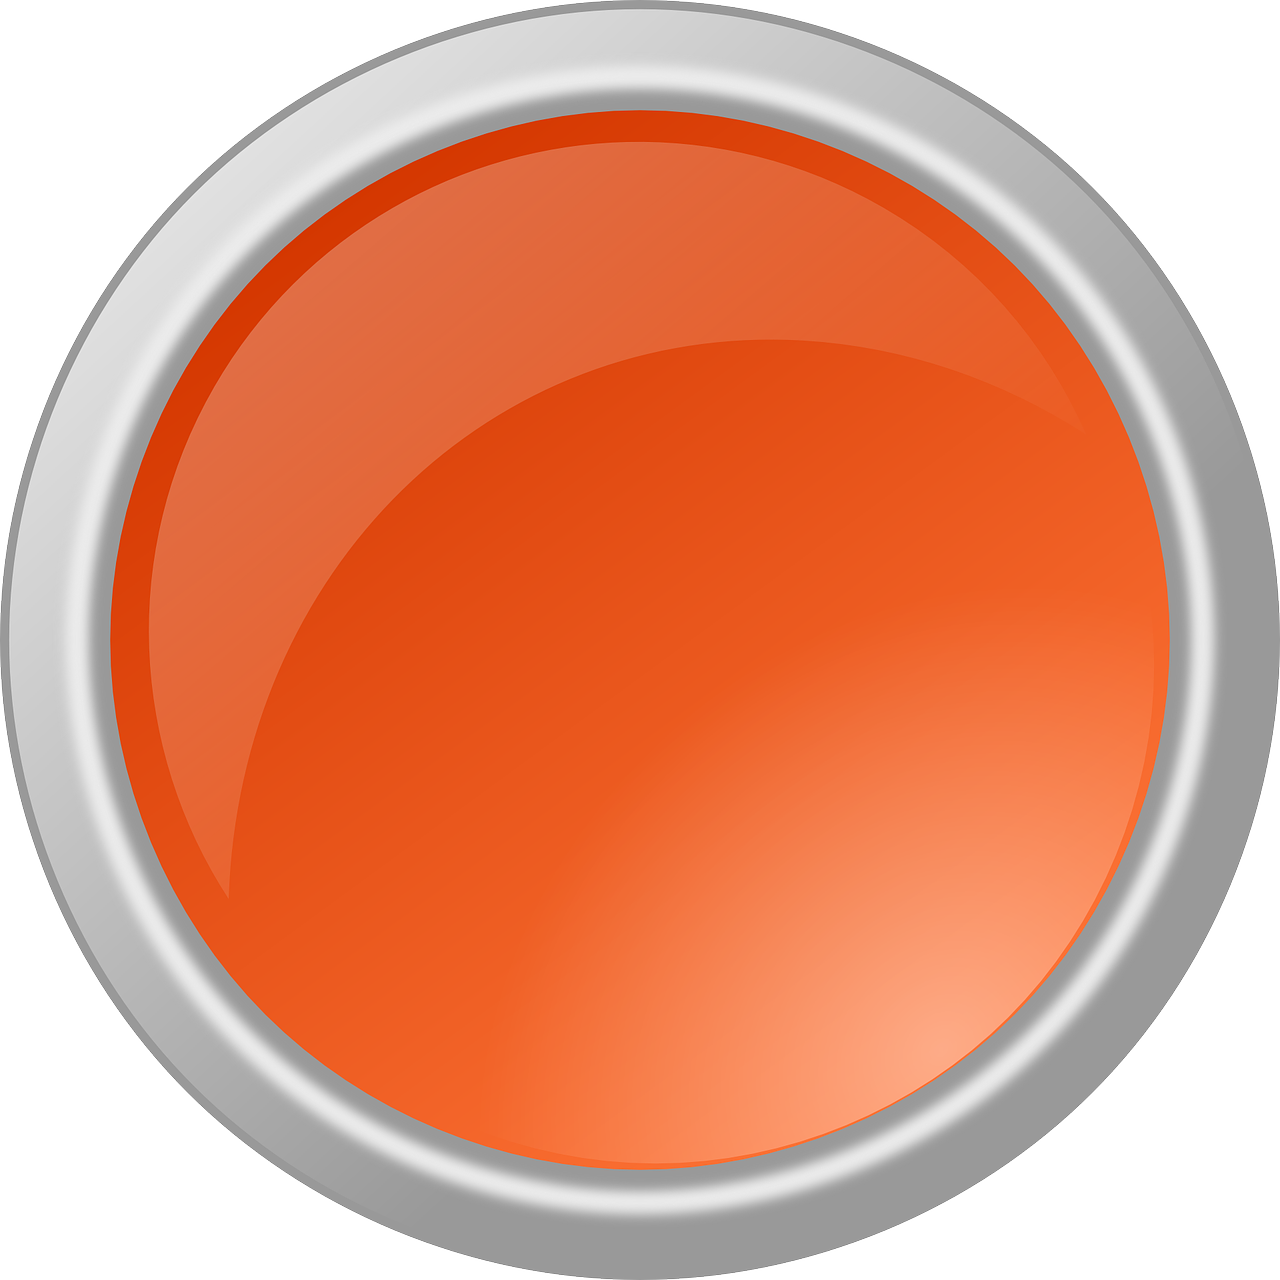 button glossy orange free photo